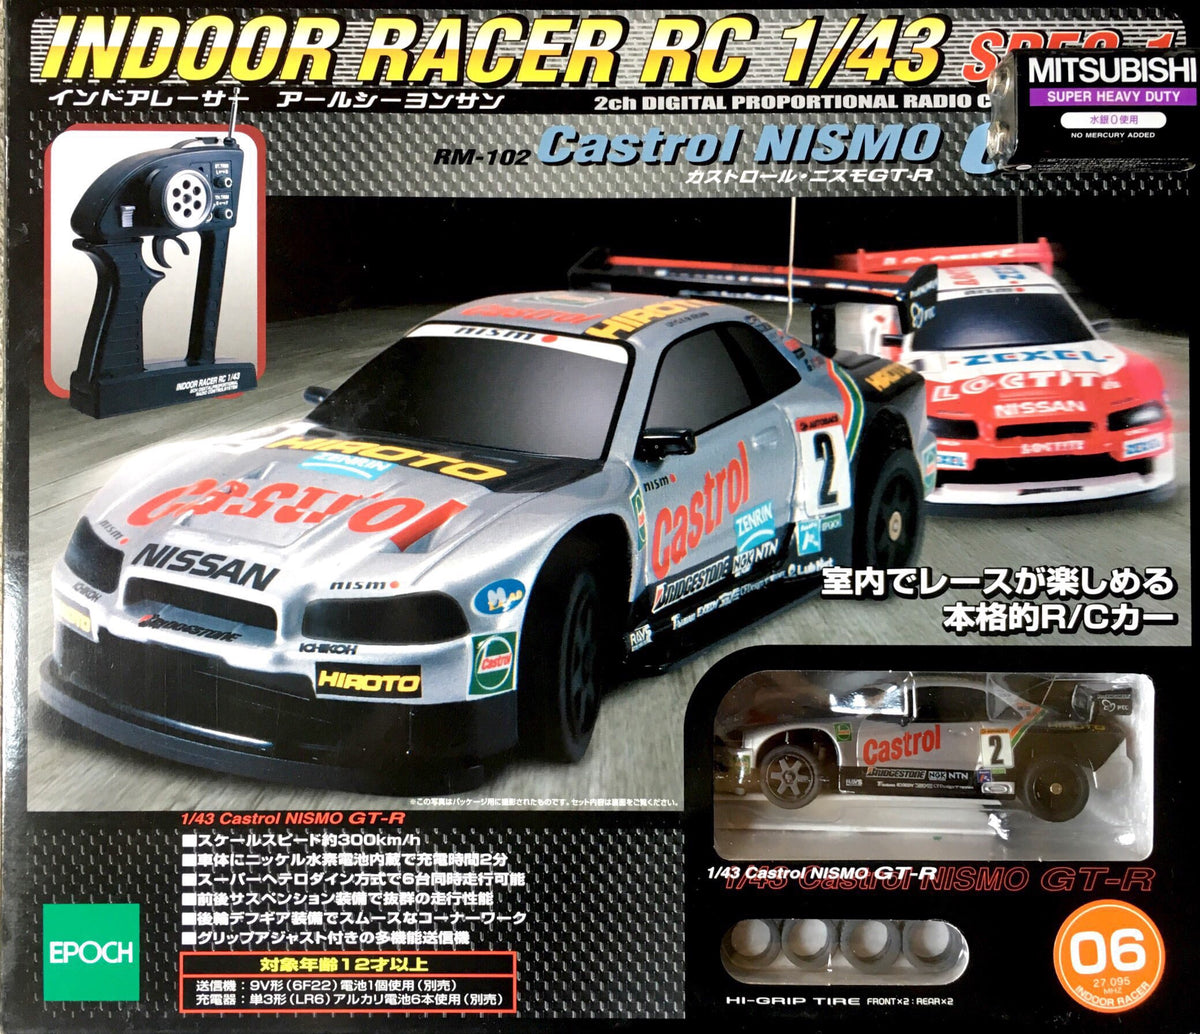 1/43 indoor RC Castrol Nismo GT-R – Wunderkammer Japan